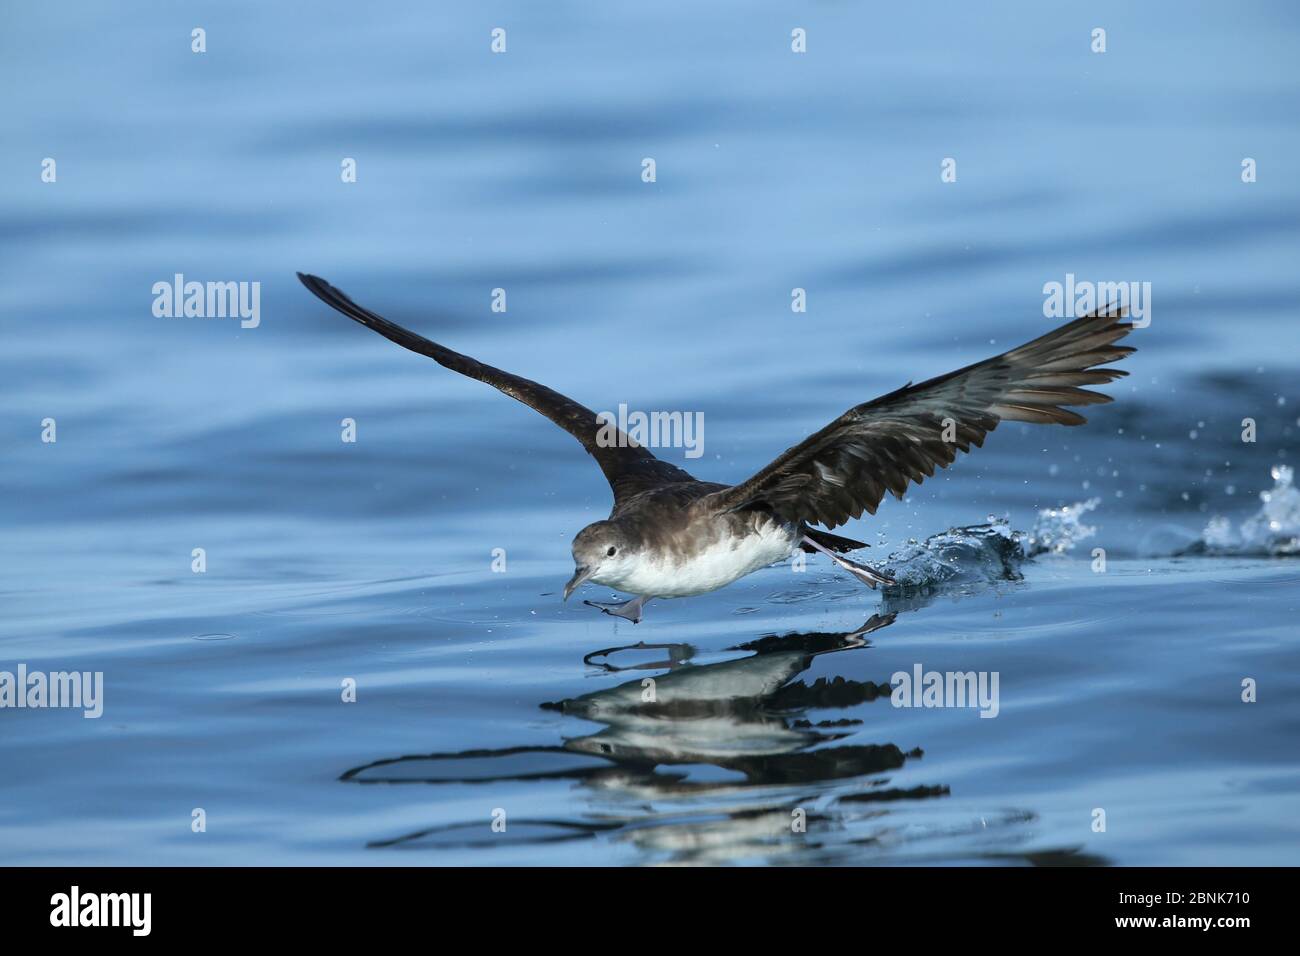 Persian shearwater (Puffinus persicus) running over water to take flight, Oman, November Stock Photo